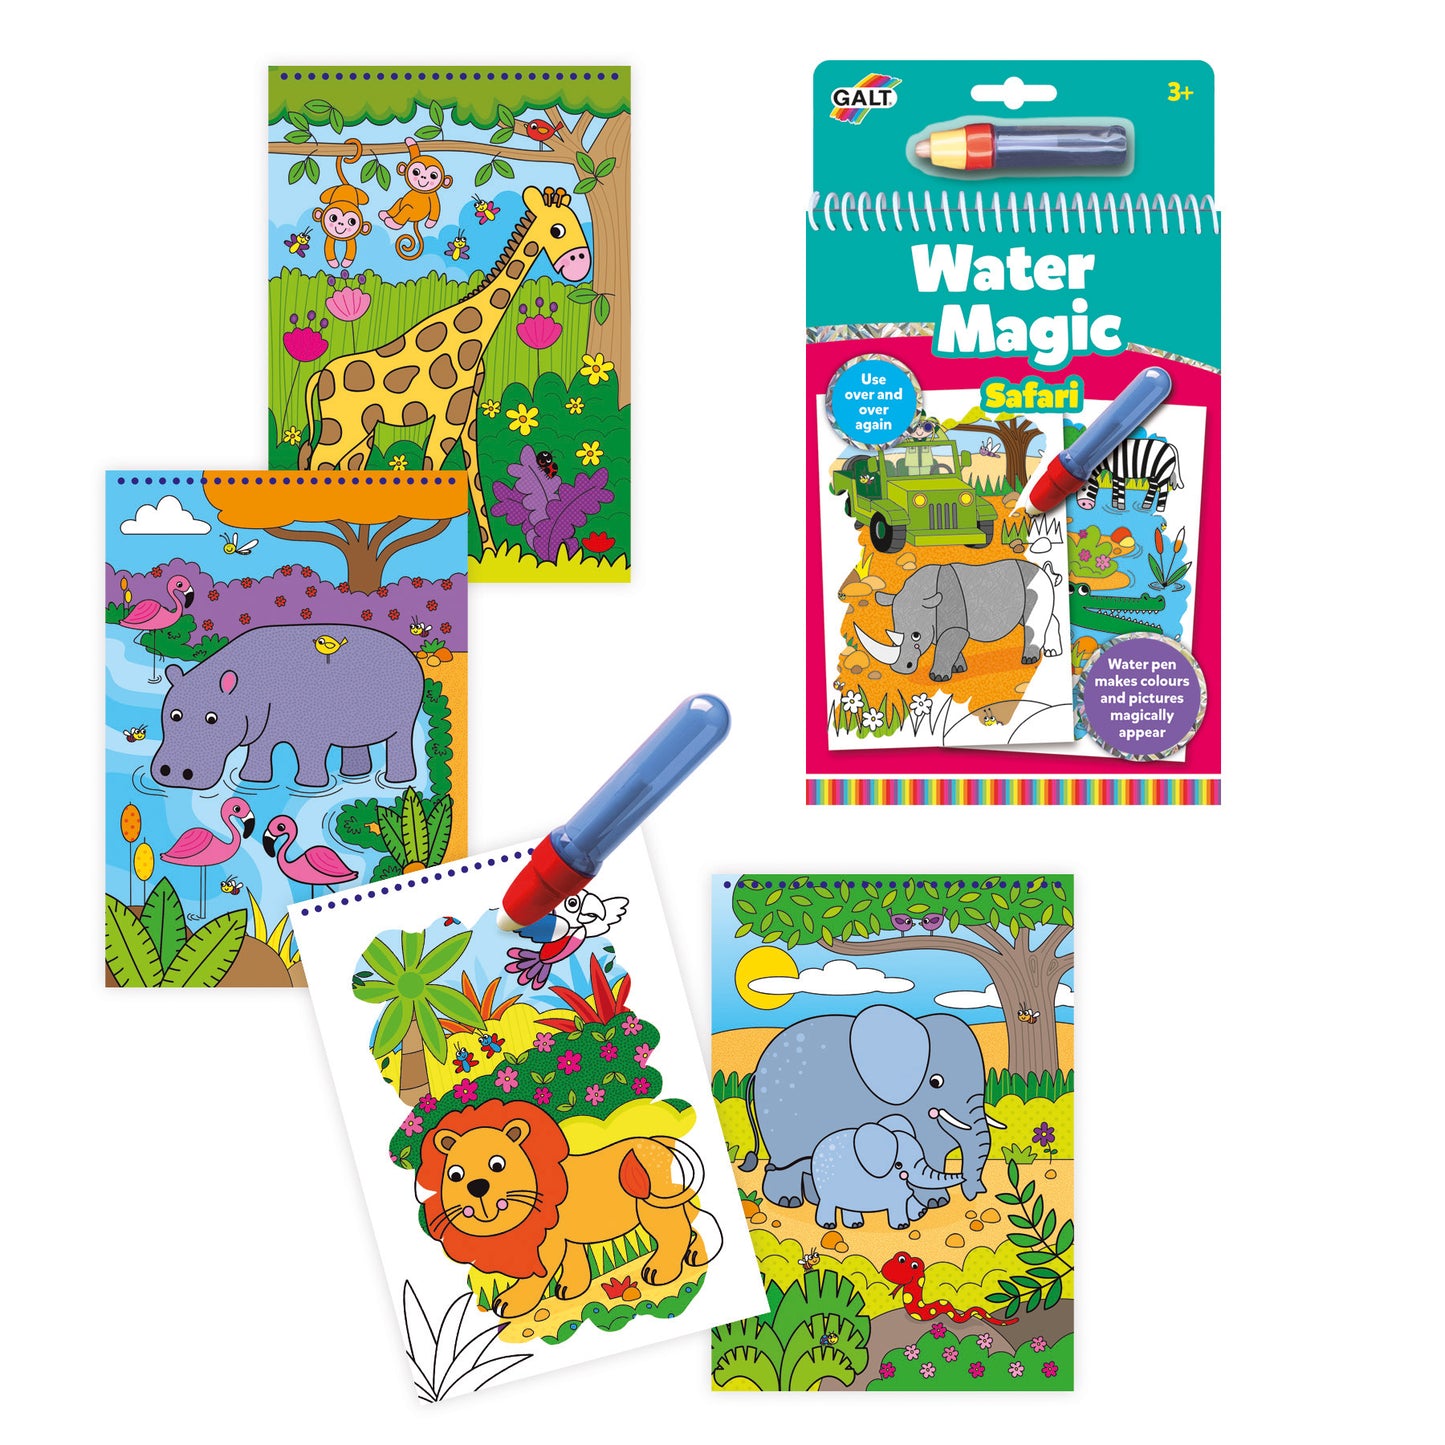 Water Magic Safari - product image - Jumboplay.com